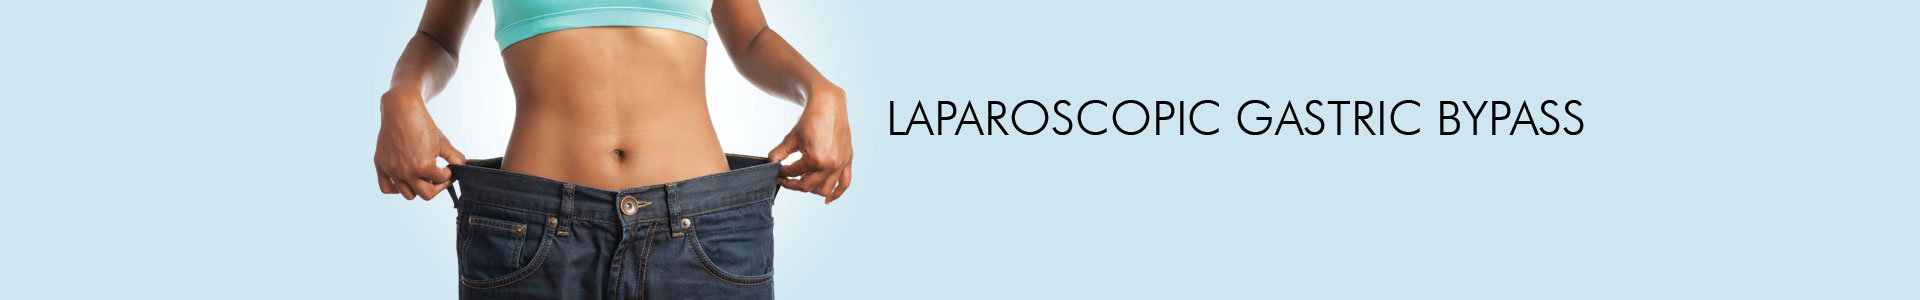 laparoscopic-gastric-bypass